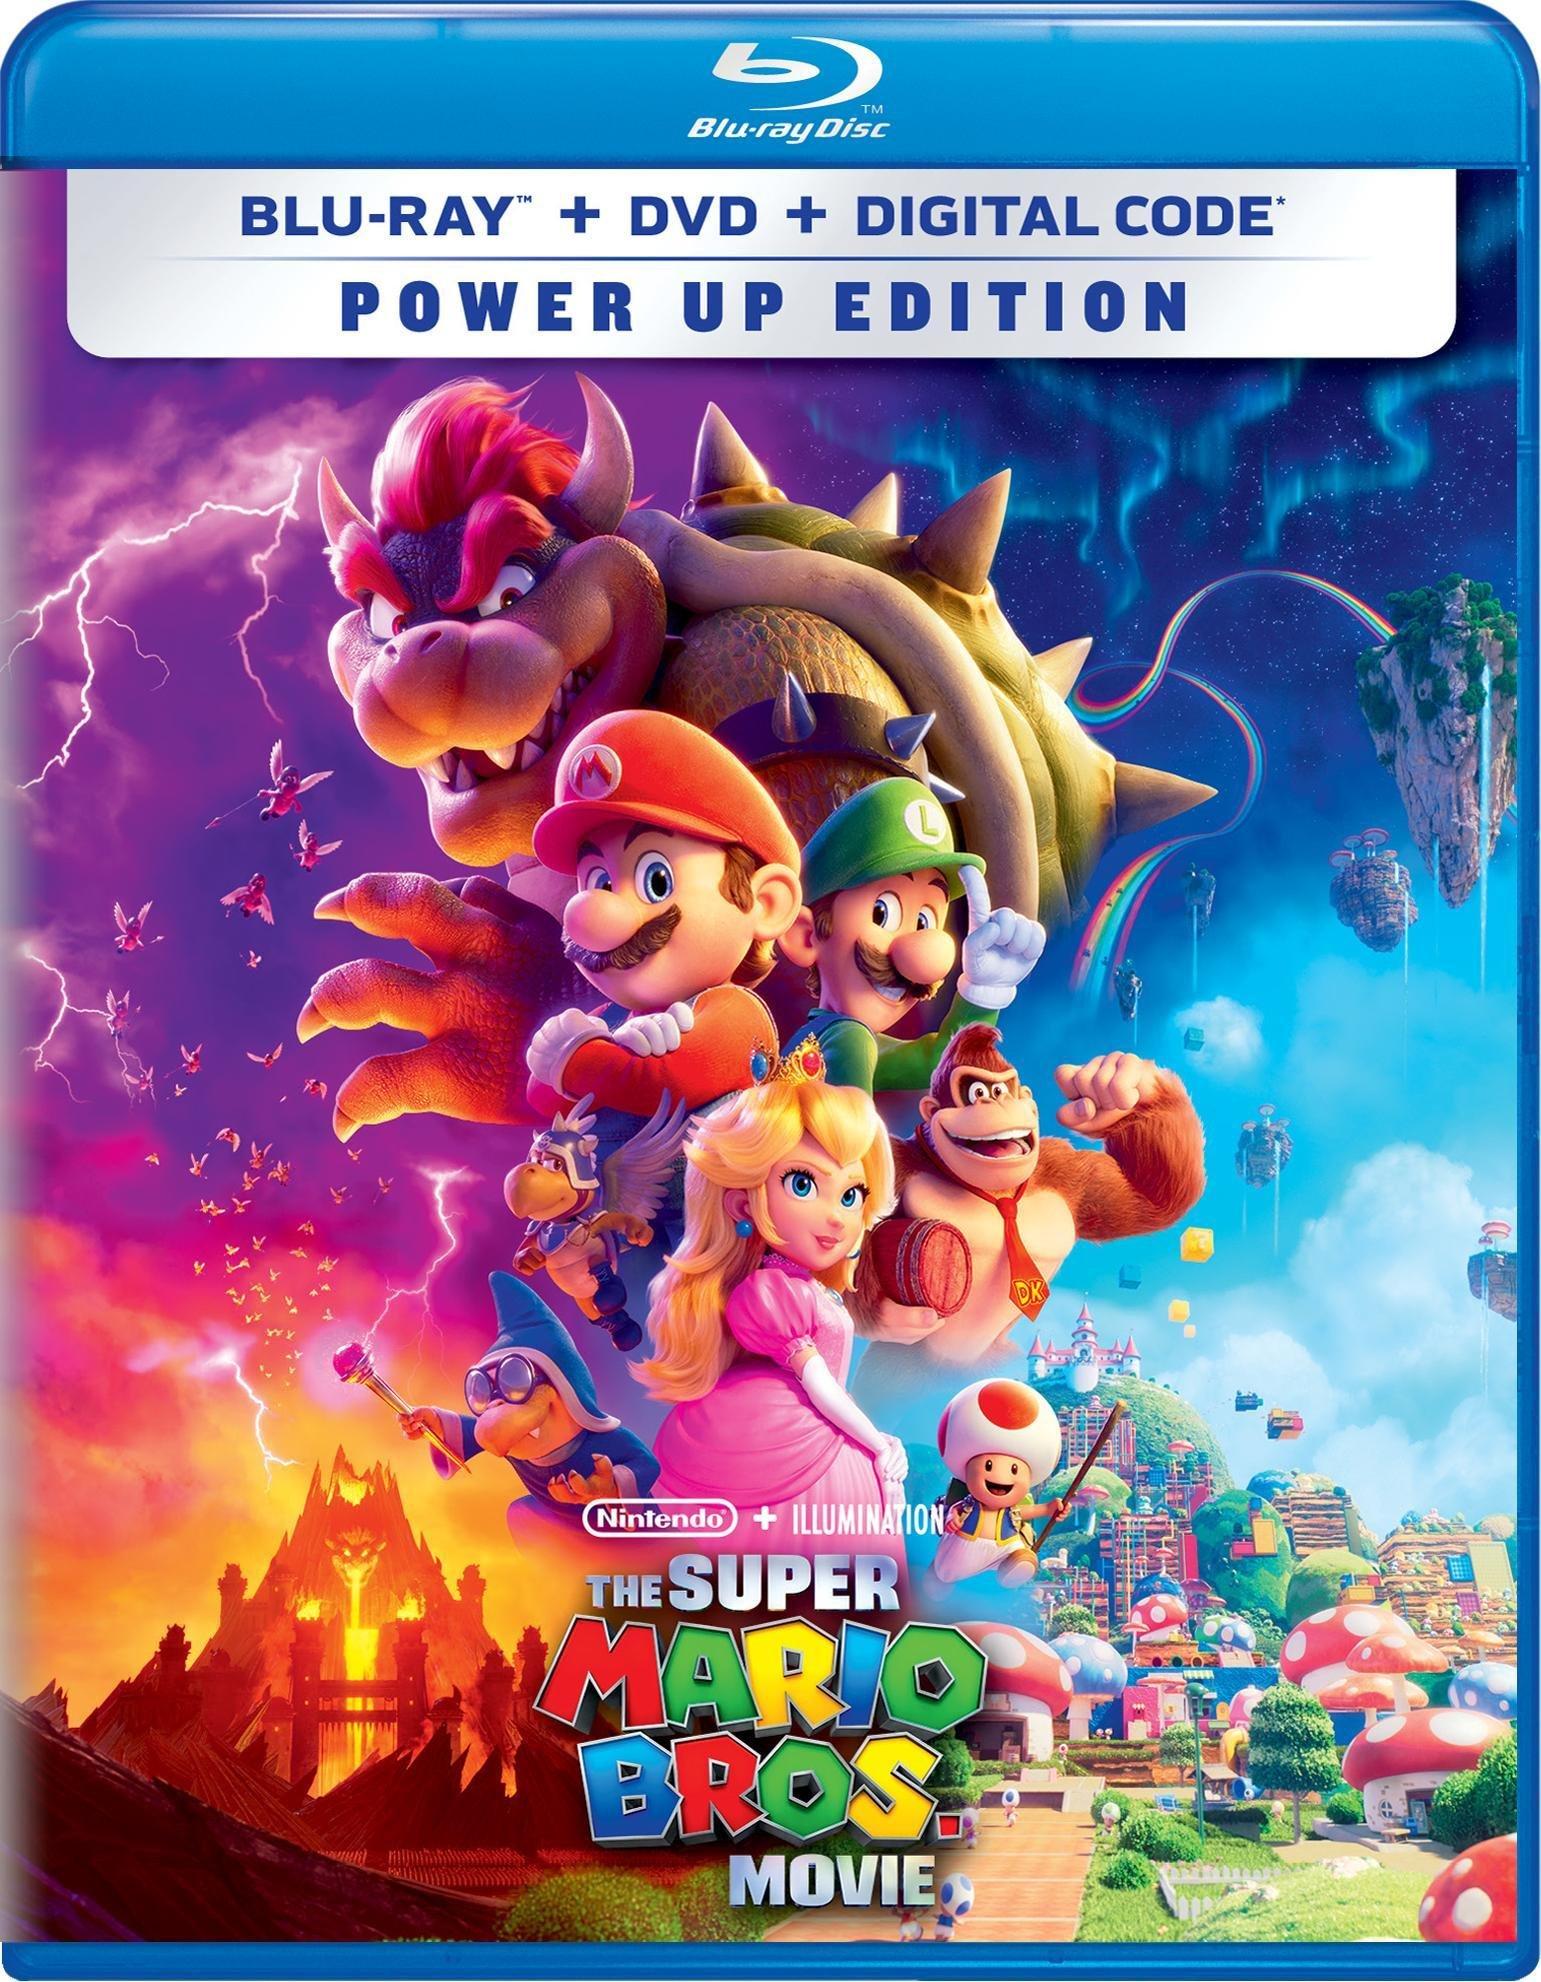 Universal Studios The Super Mario Bros.Movie - Blu Ray, DVD and